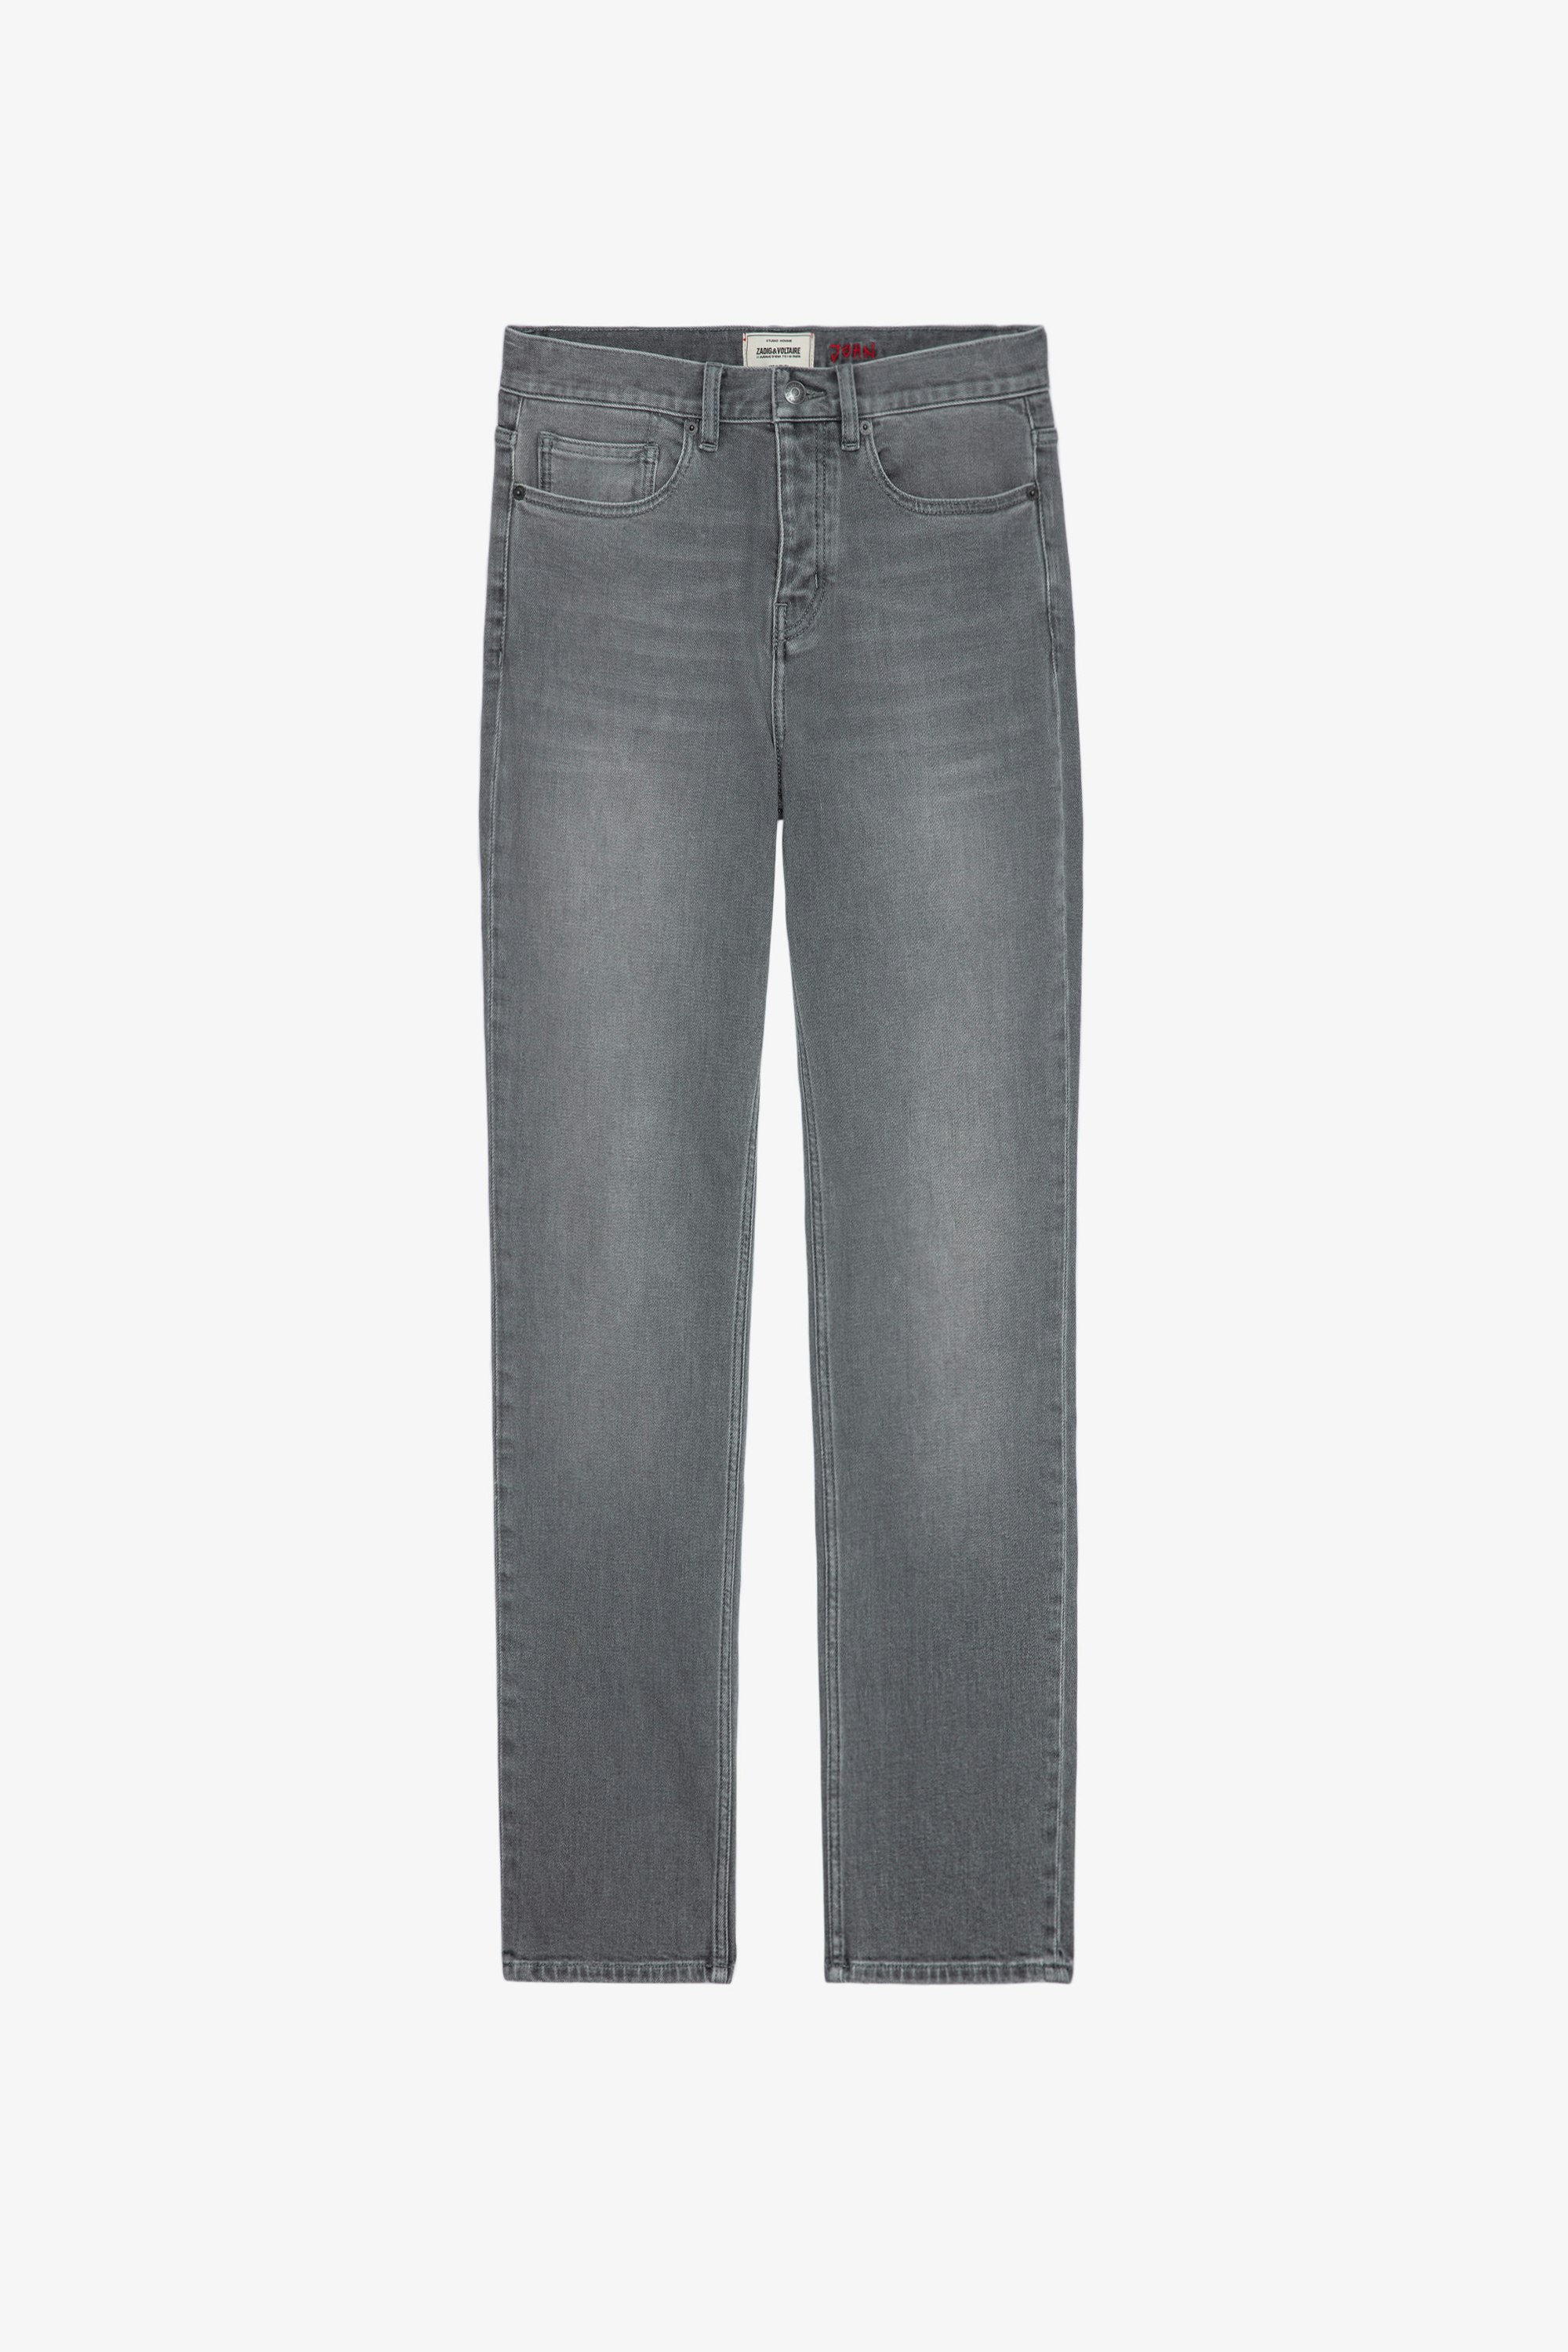 John Jeans Men's contrasting denim jeans